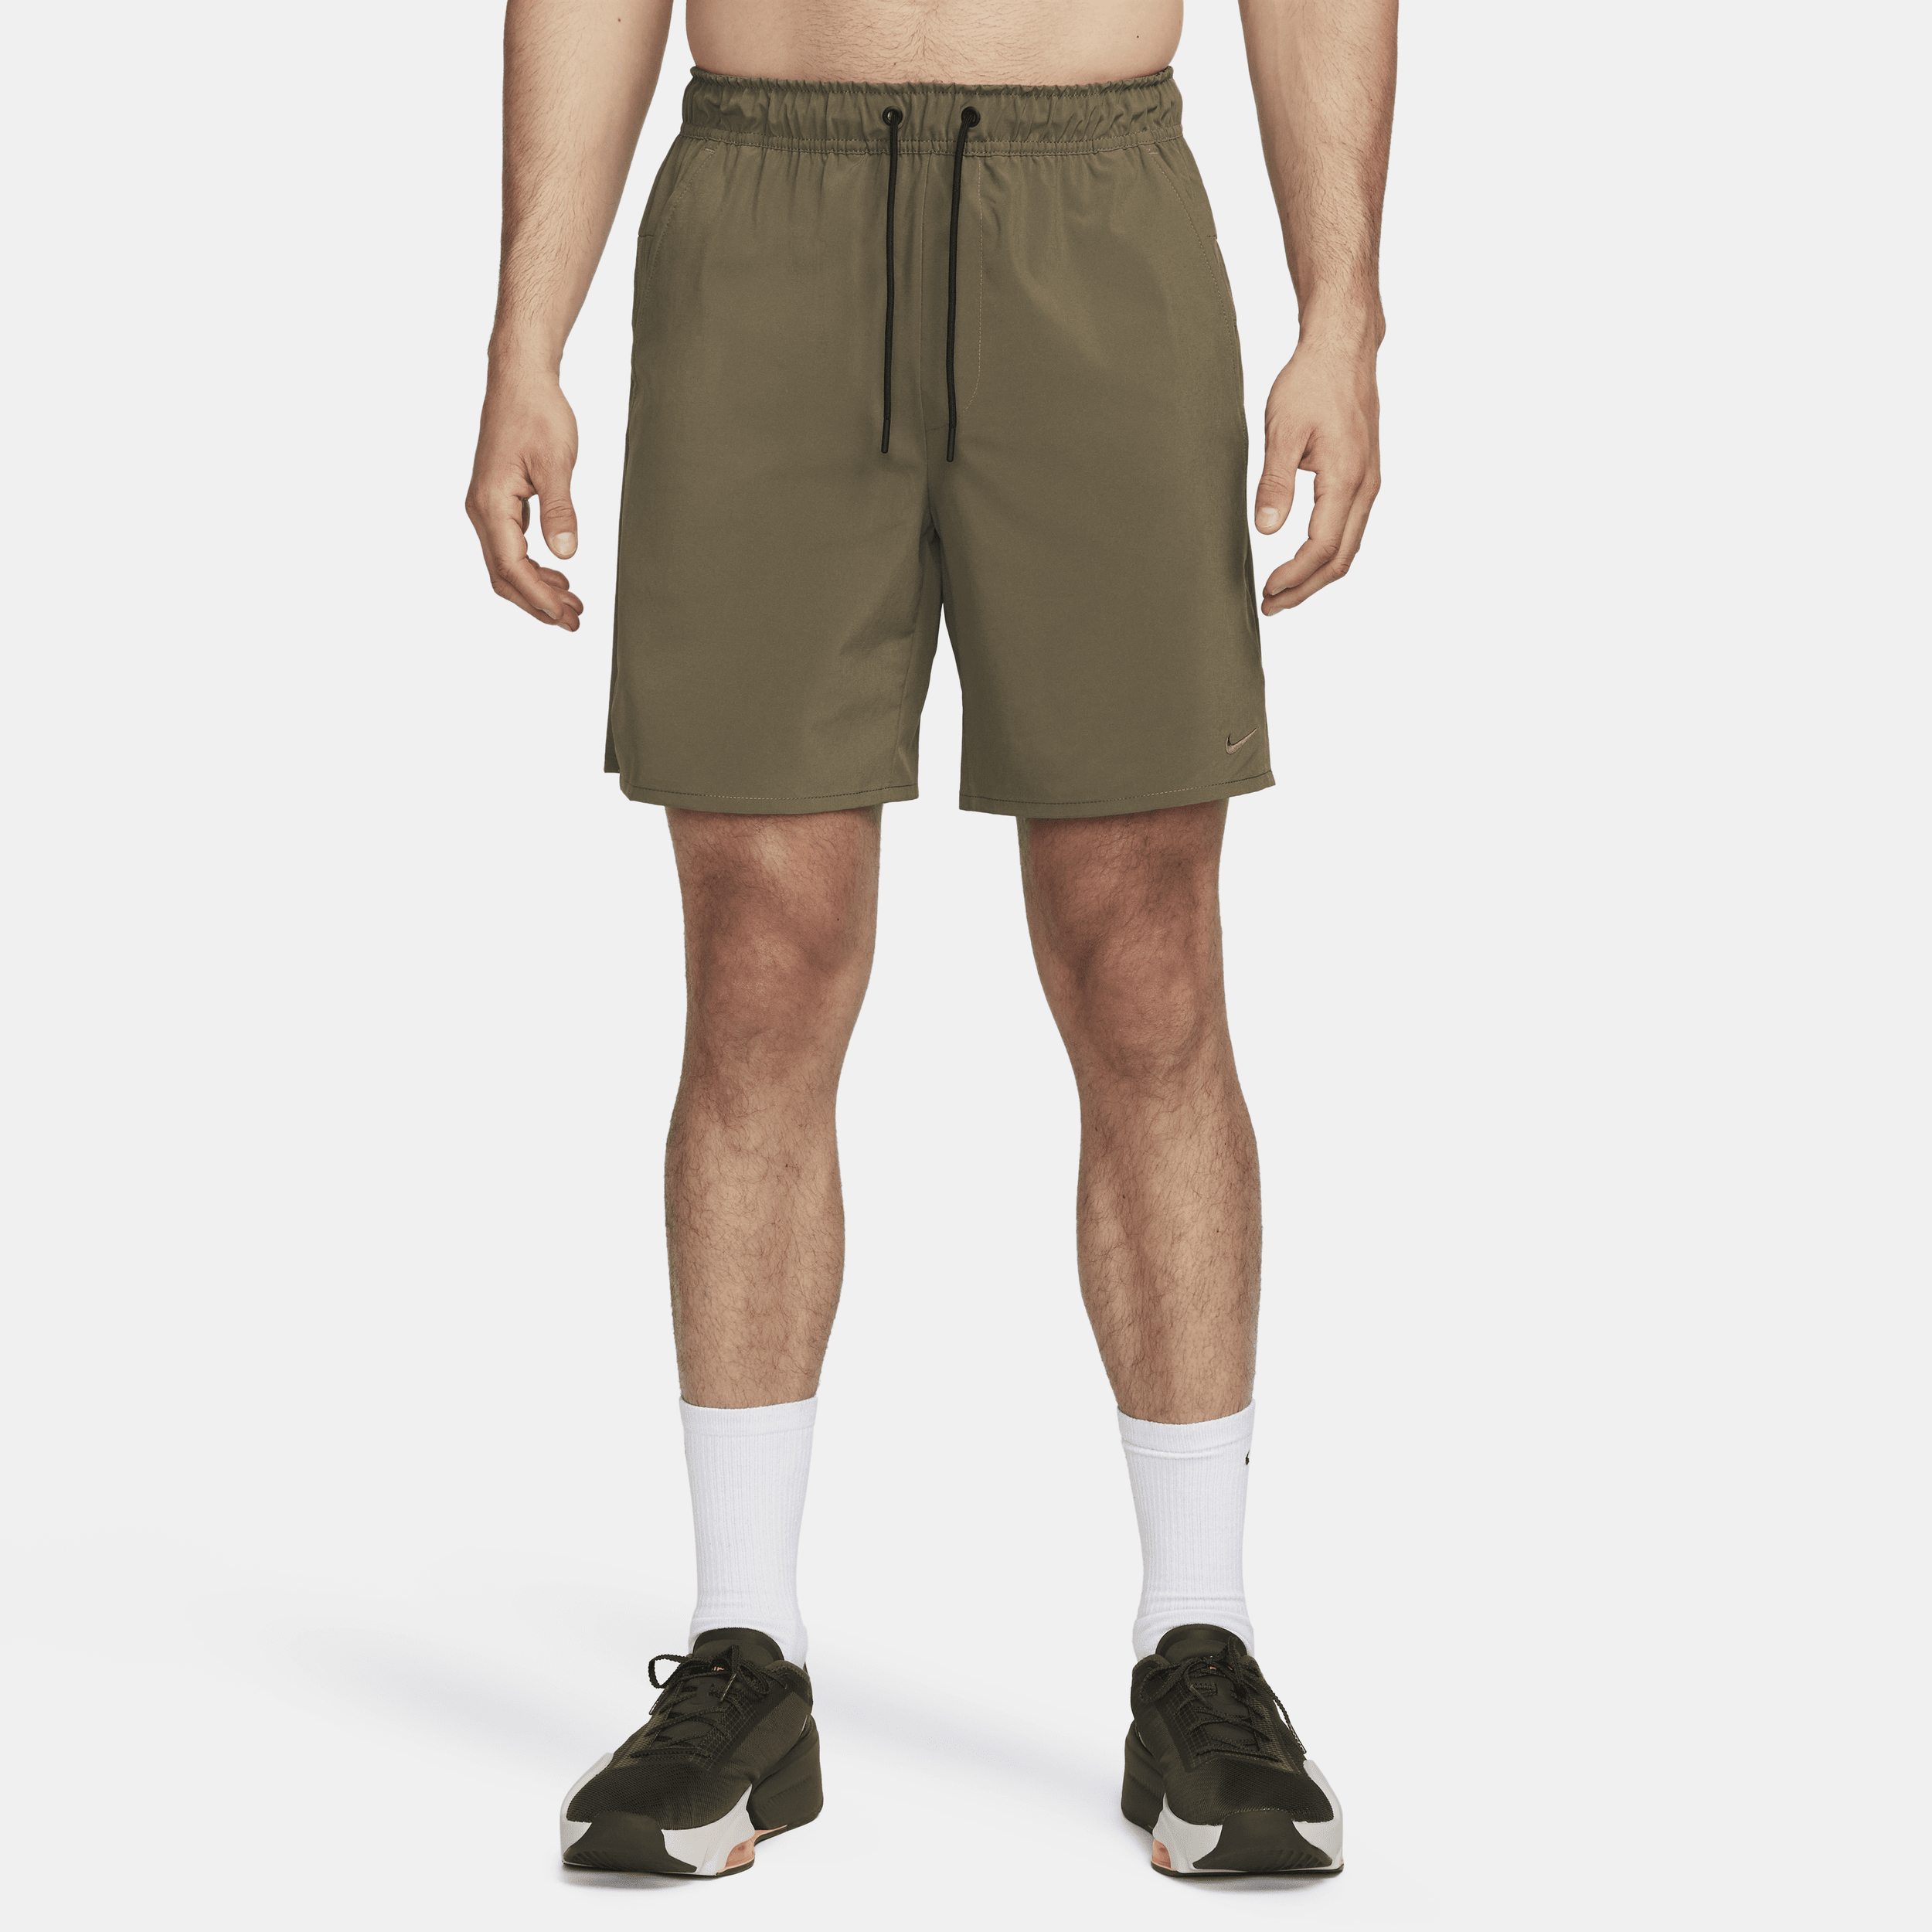 Nike Unlimited Pantalón corto Dri-FIT versátil de 18 cm sin forro - Hombre - Verde